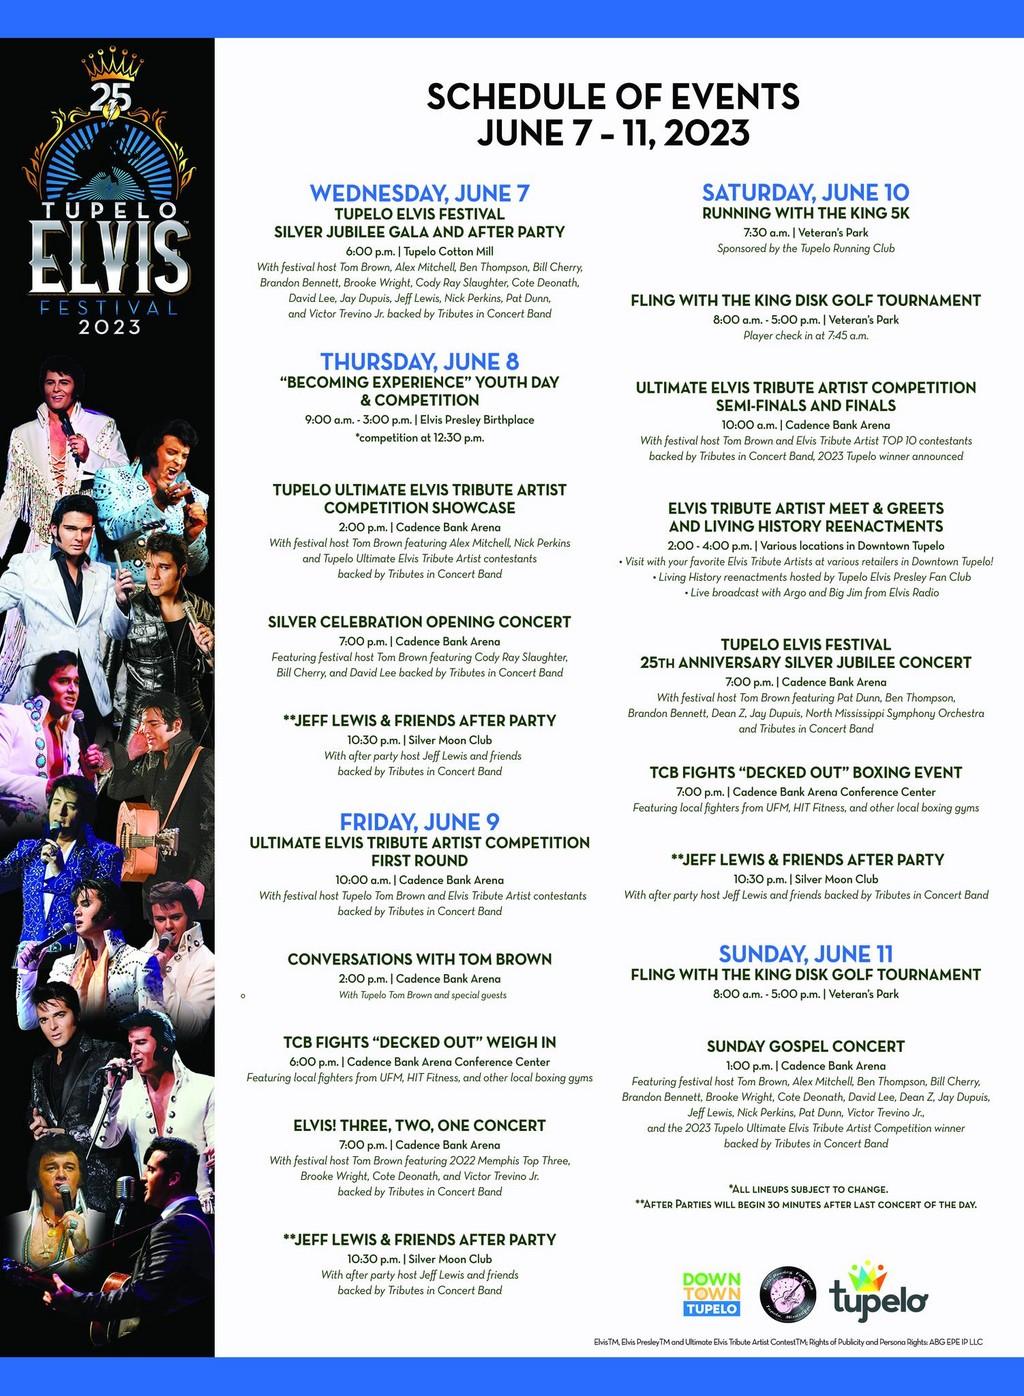 Lineup Poster Tupelo Elvis Festival 2023